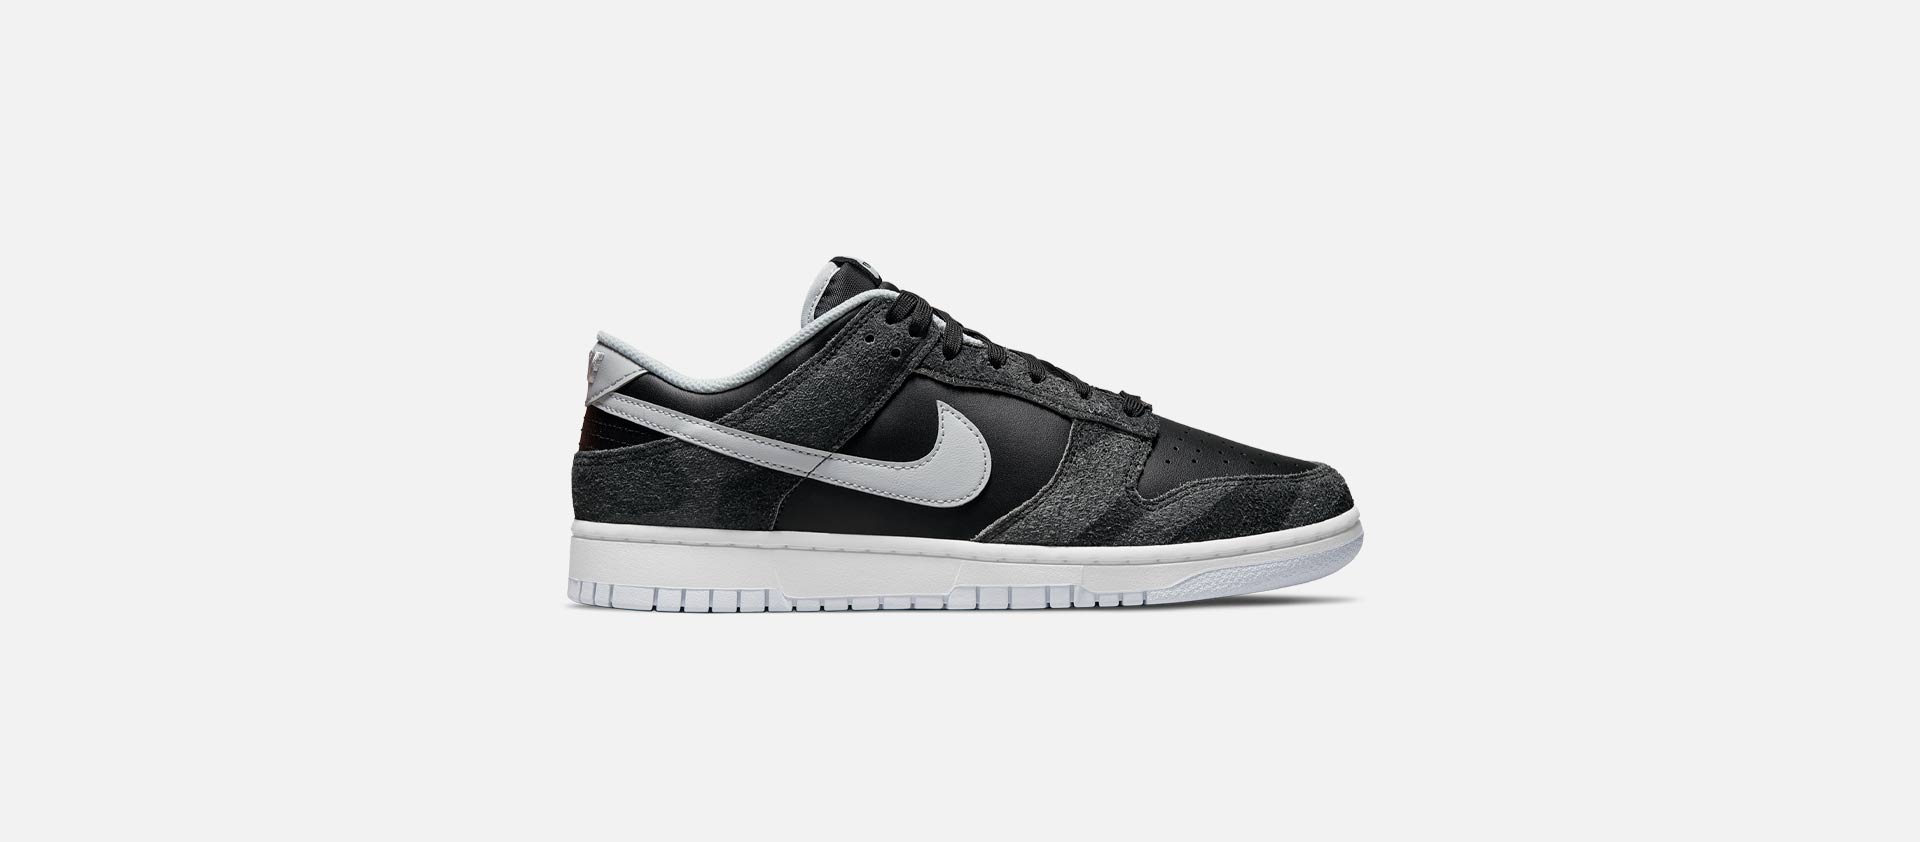 Raffles Nike Dunk Low Premium “Zebra” DH7913-001